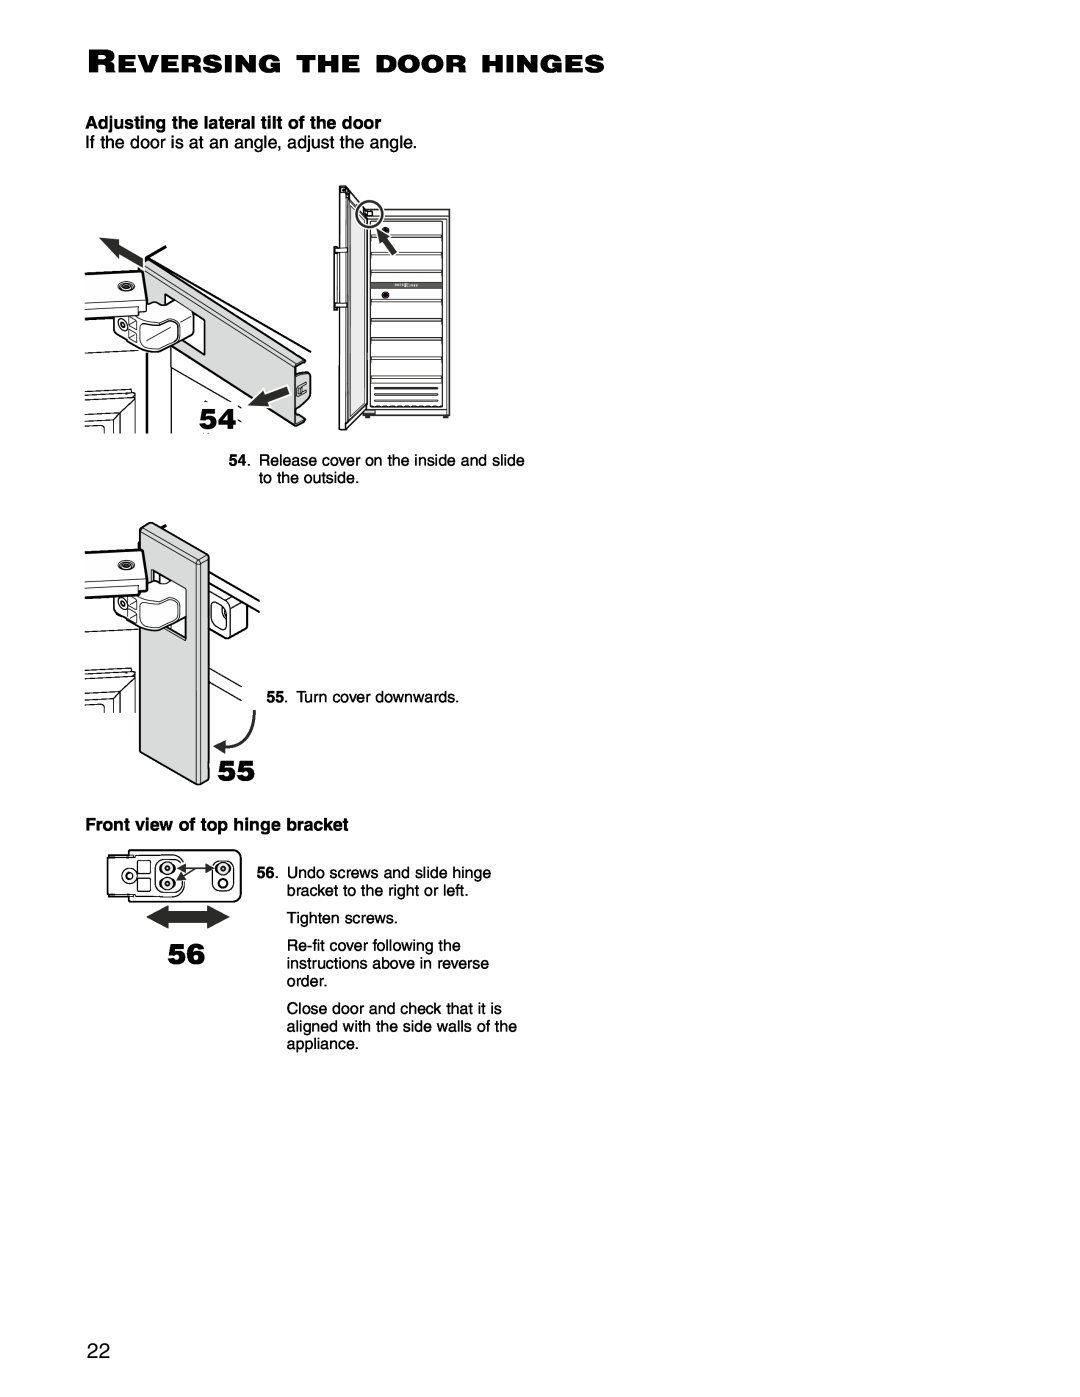 Liebherr WS 17800 manual Reversing the door hinges, Adjusting the lateral tilt of the door, Front view of top hinge bracket 